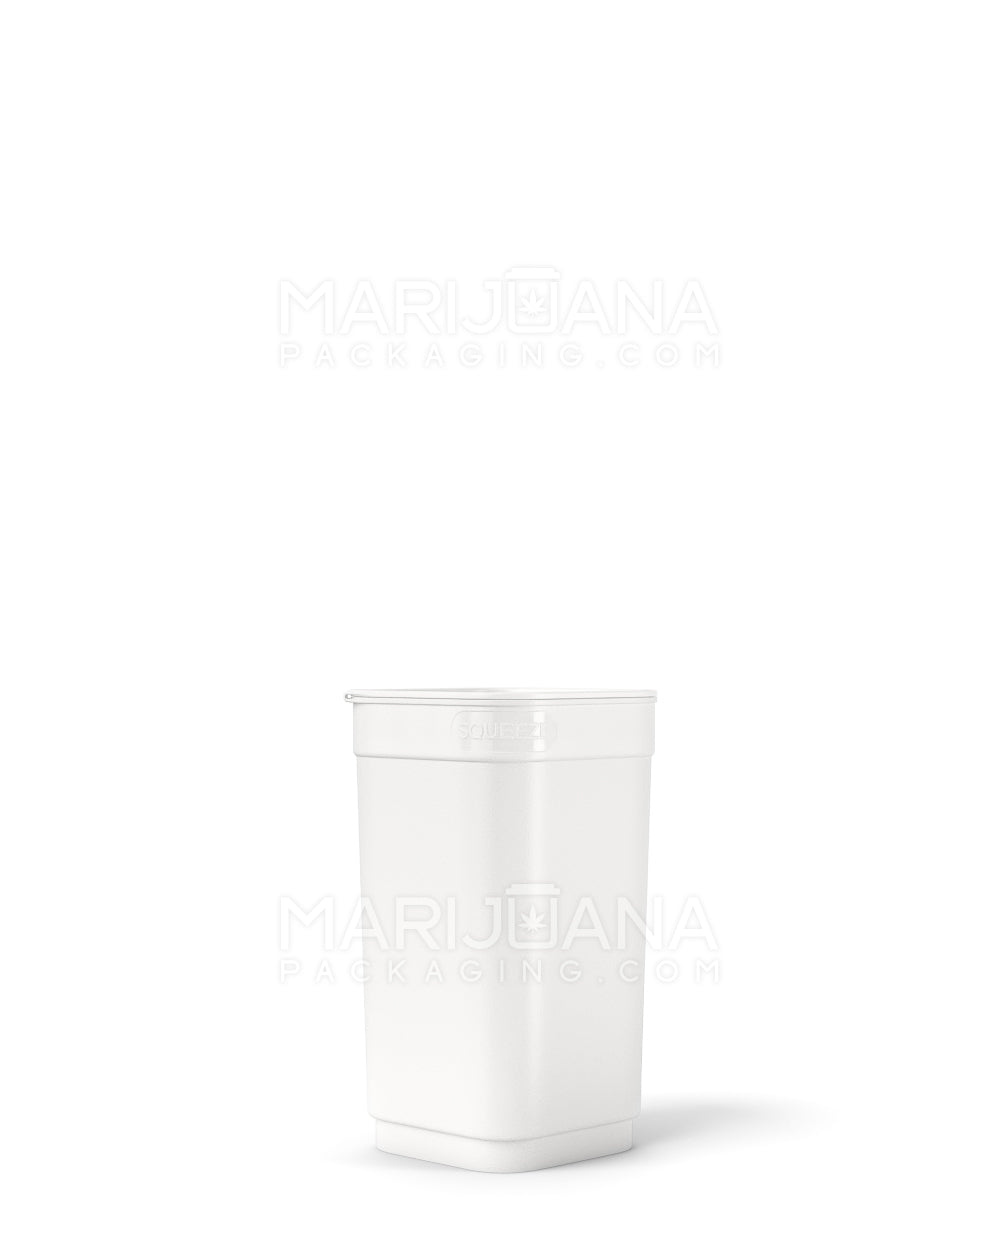 POLLEN GEAR Child Resistant 100% Recyclable Opaque White Pop Box Pop Top Bottles | 20dr - 3.5g | Sample